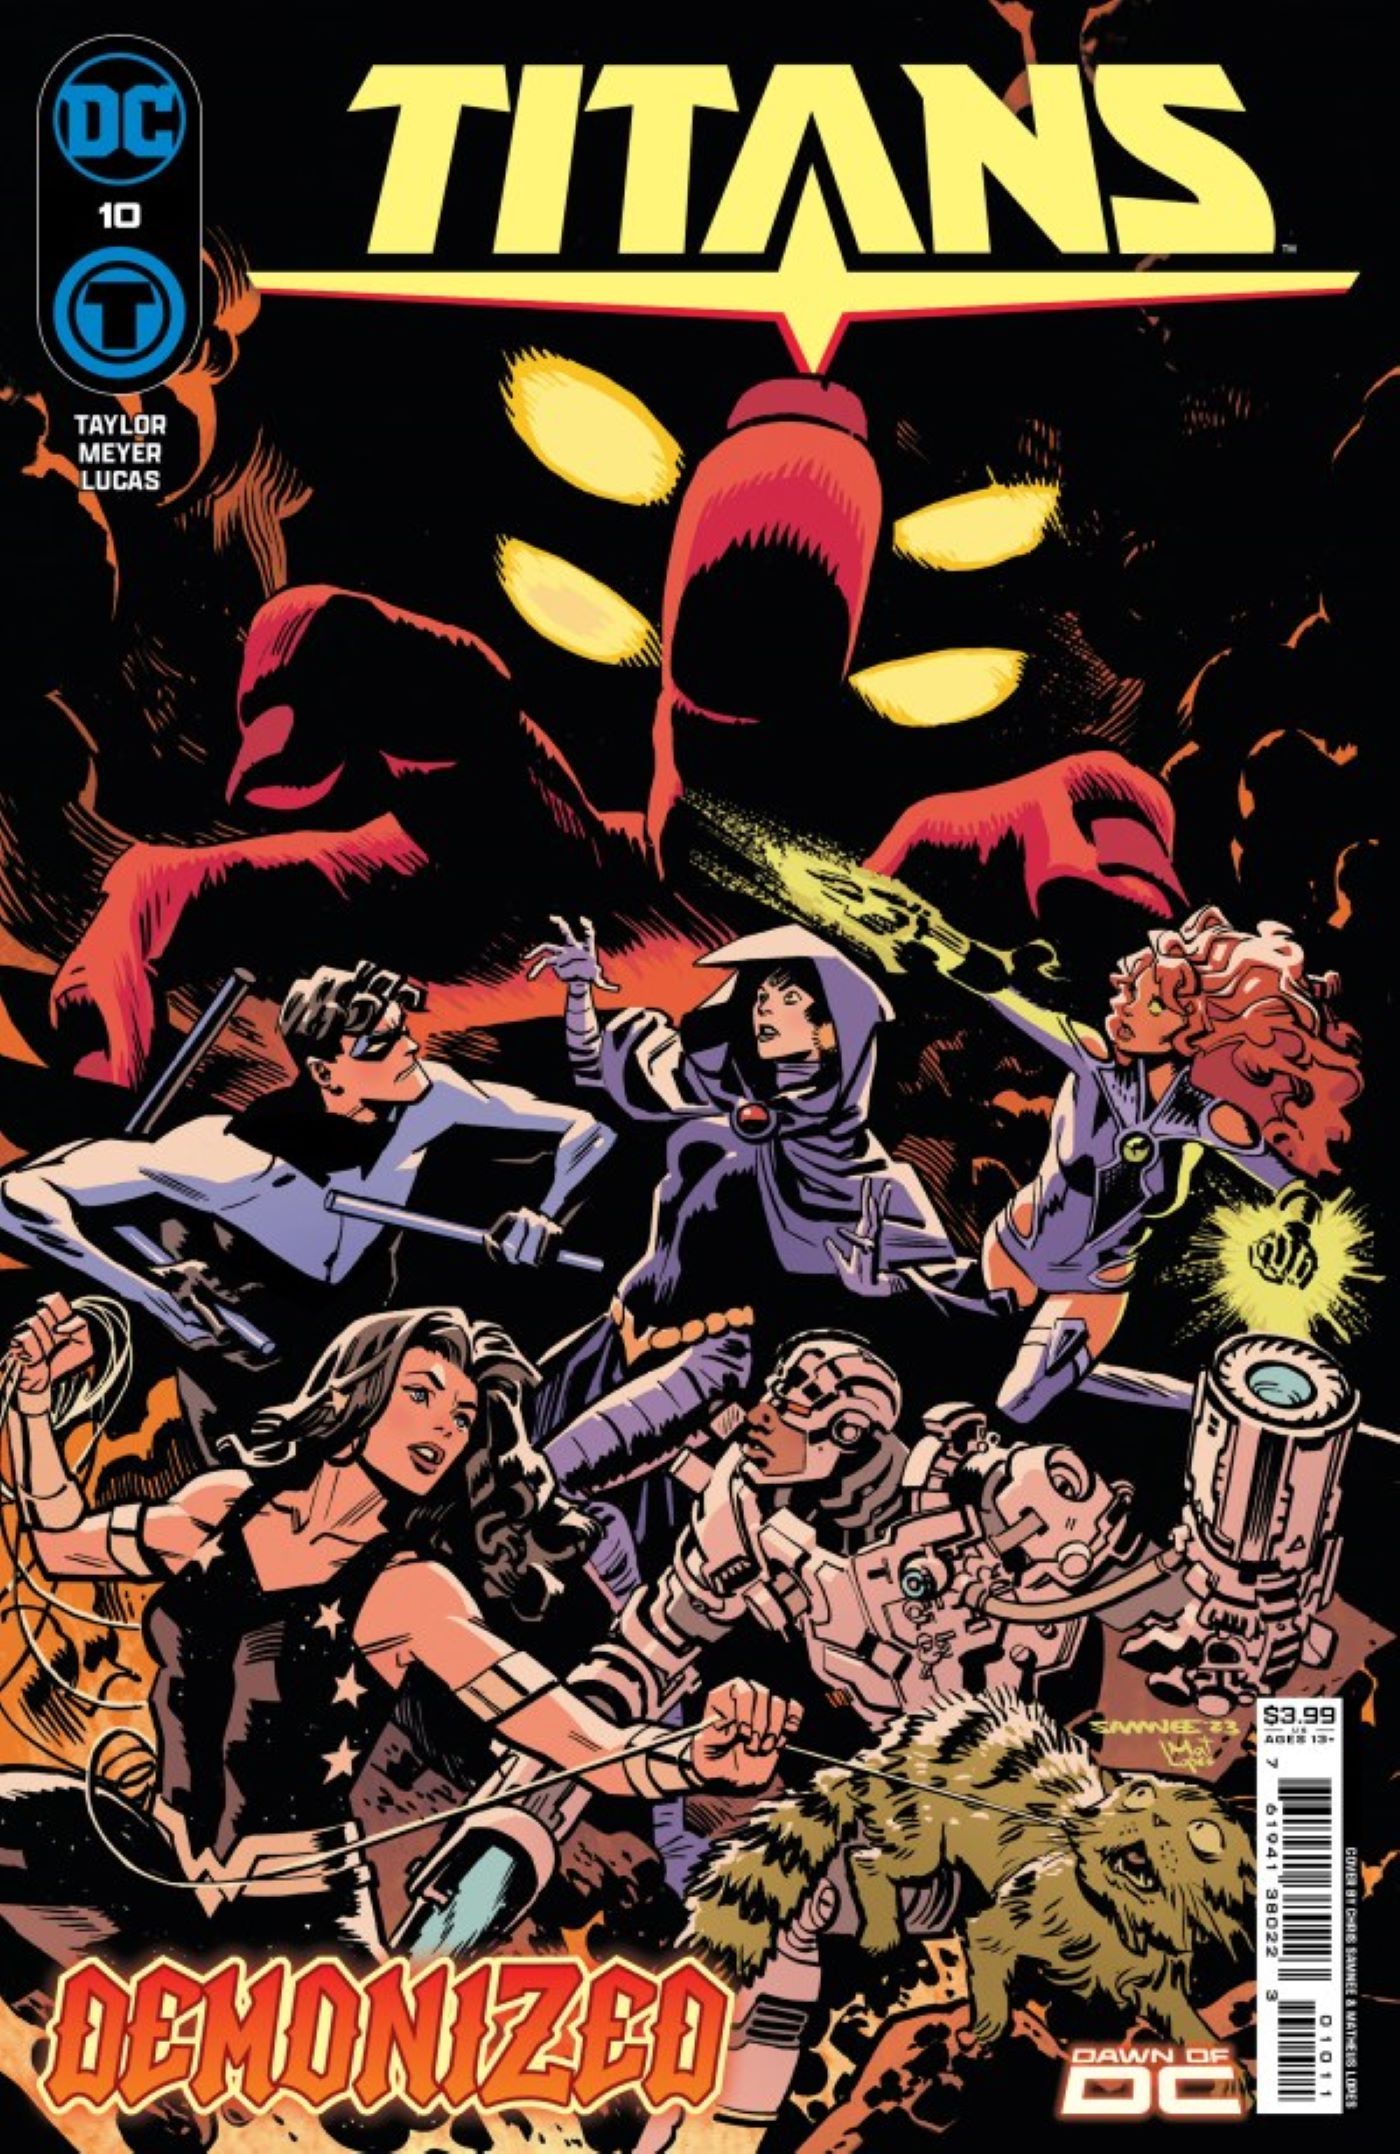 Capa de Titans #10 com Trigon Nightwing Starfire Raven Donna Troy Cyborg Beast Boy